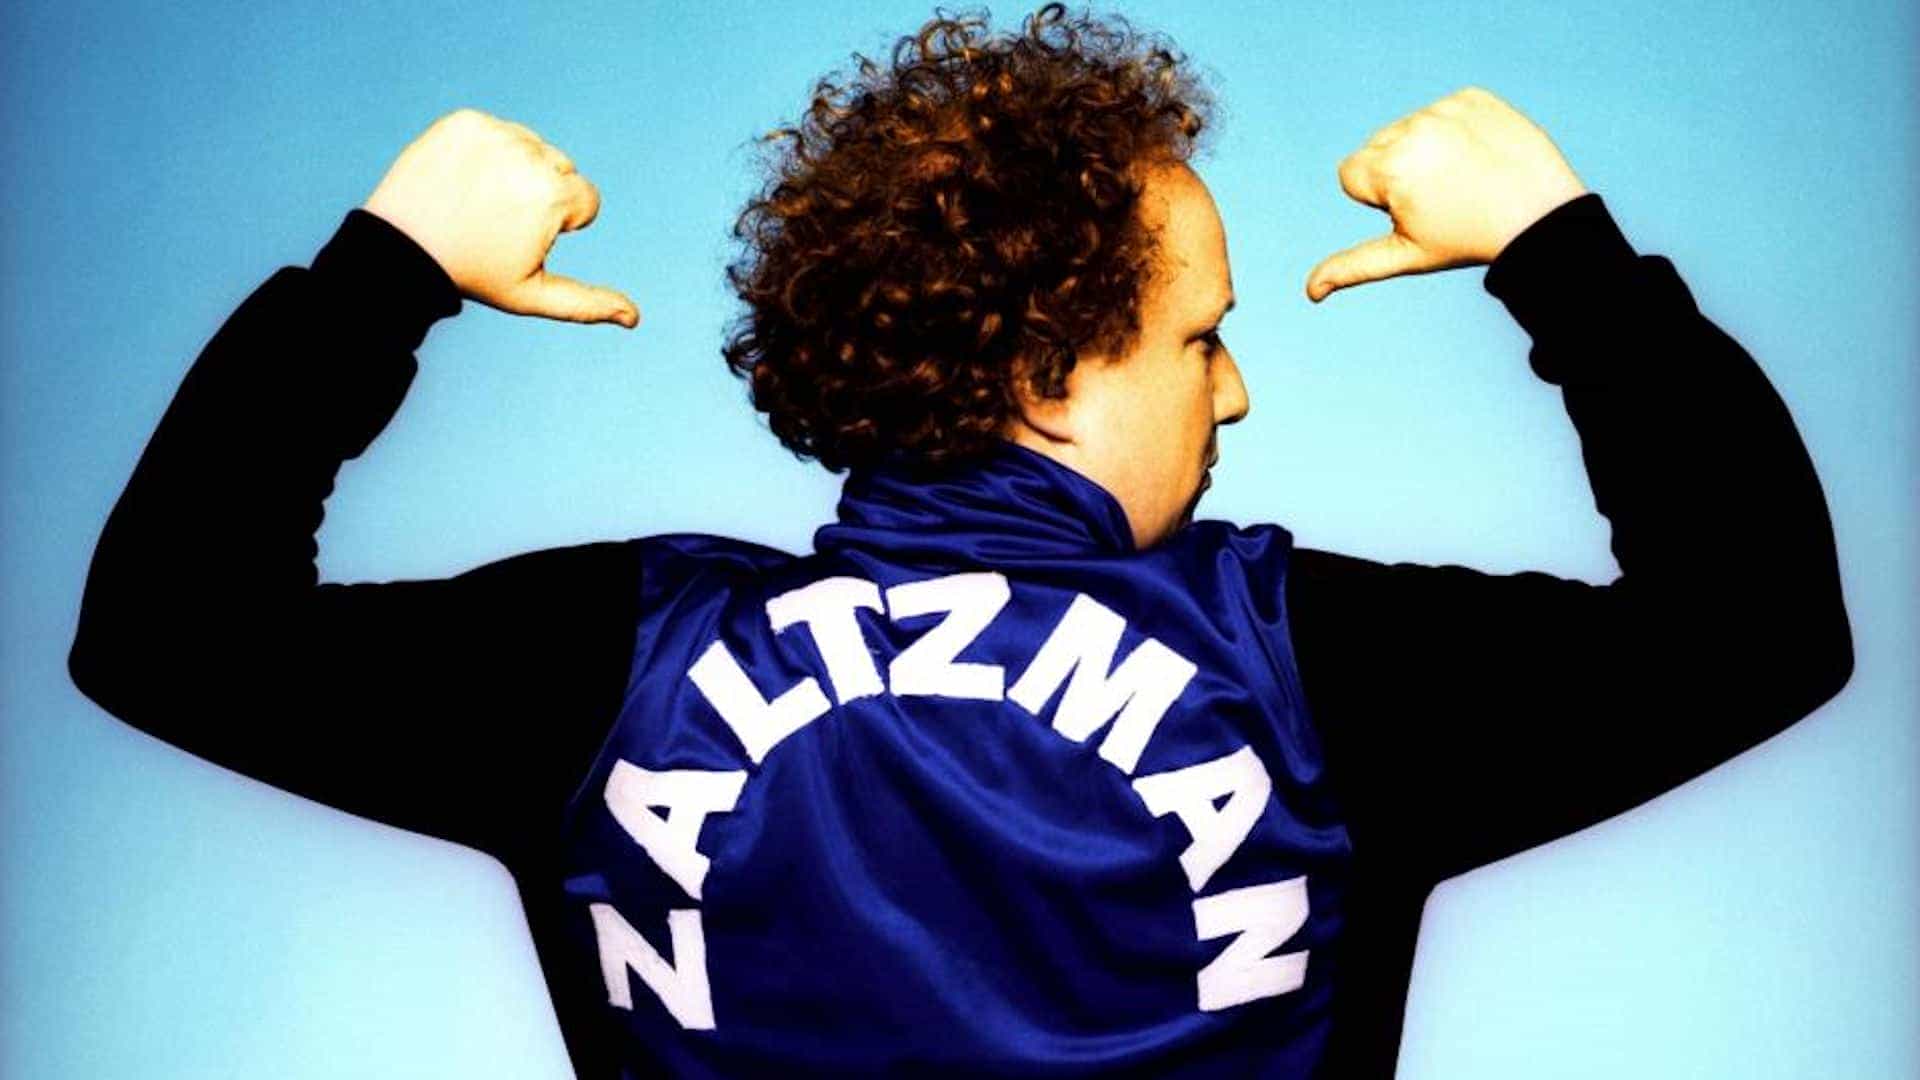 Andy Zaltzman